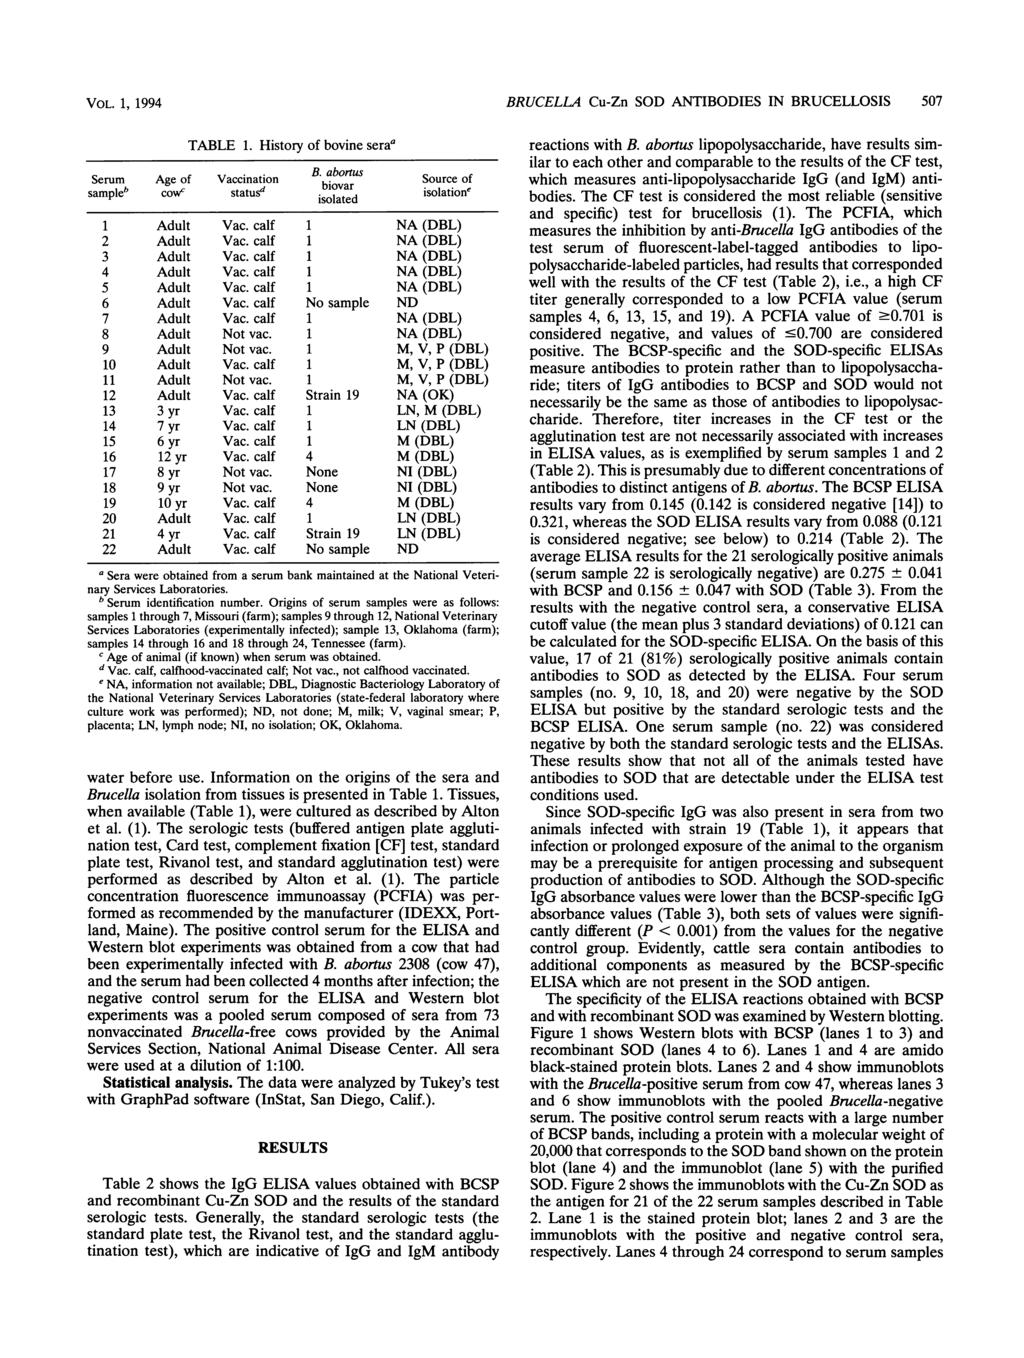 VOL. 1, 1994 TABLE 1. History of bovine sera Serum Age of Vaccination B. abortus Source of sampleb cow' statusd isolated biovar isolation' isolation 1 Adult Vac. calf 1 NA (DBL) 2 Adult Vac.